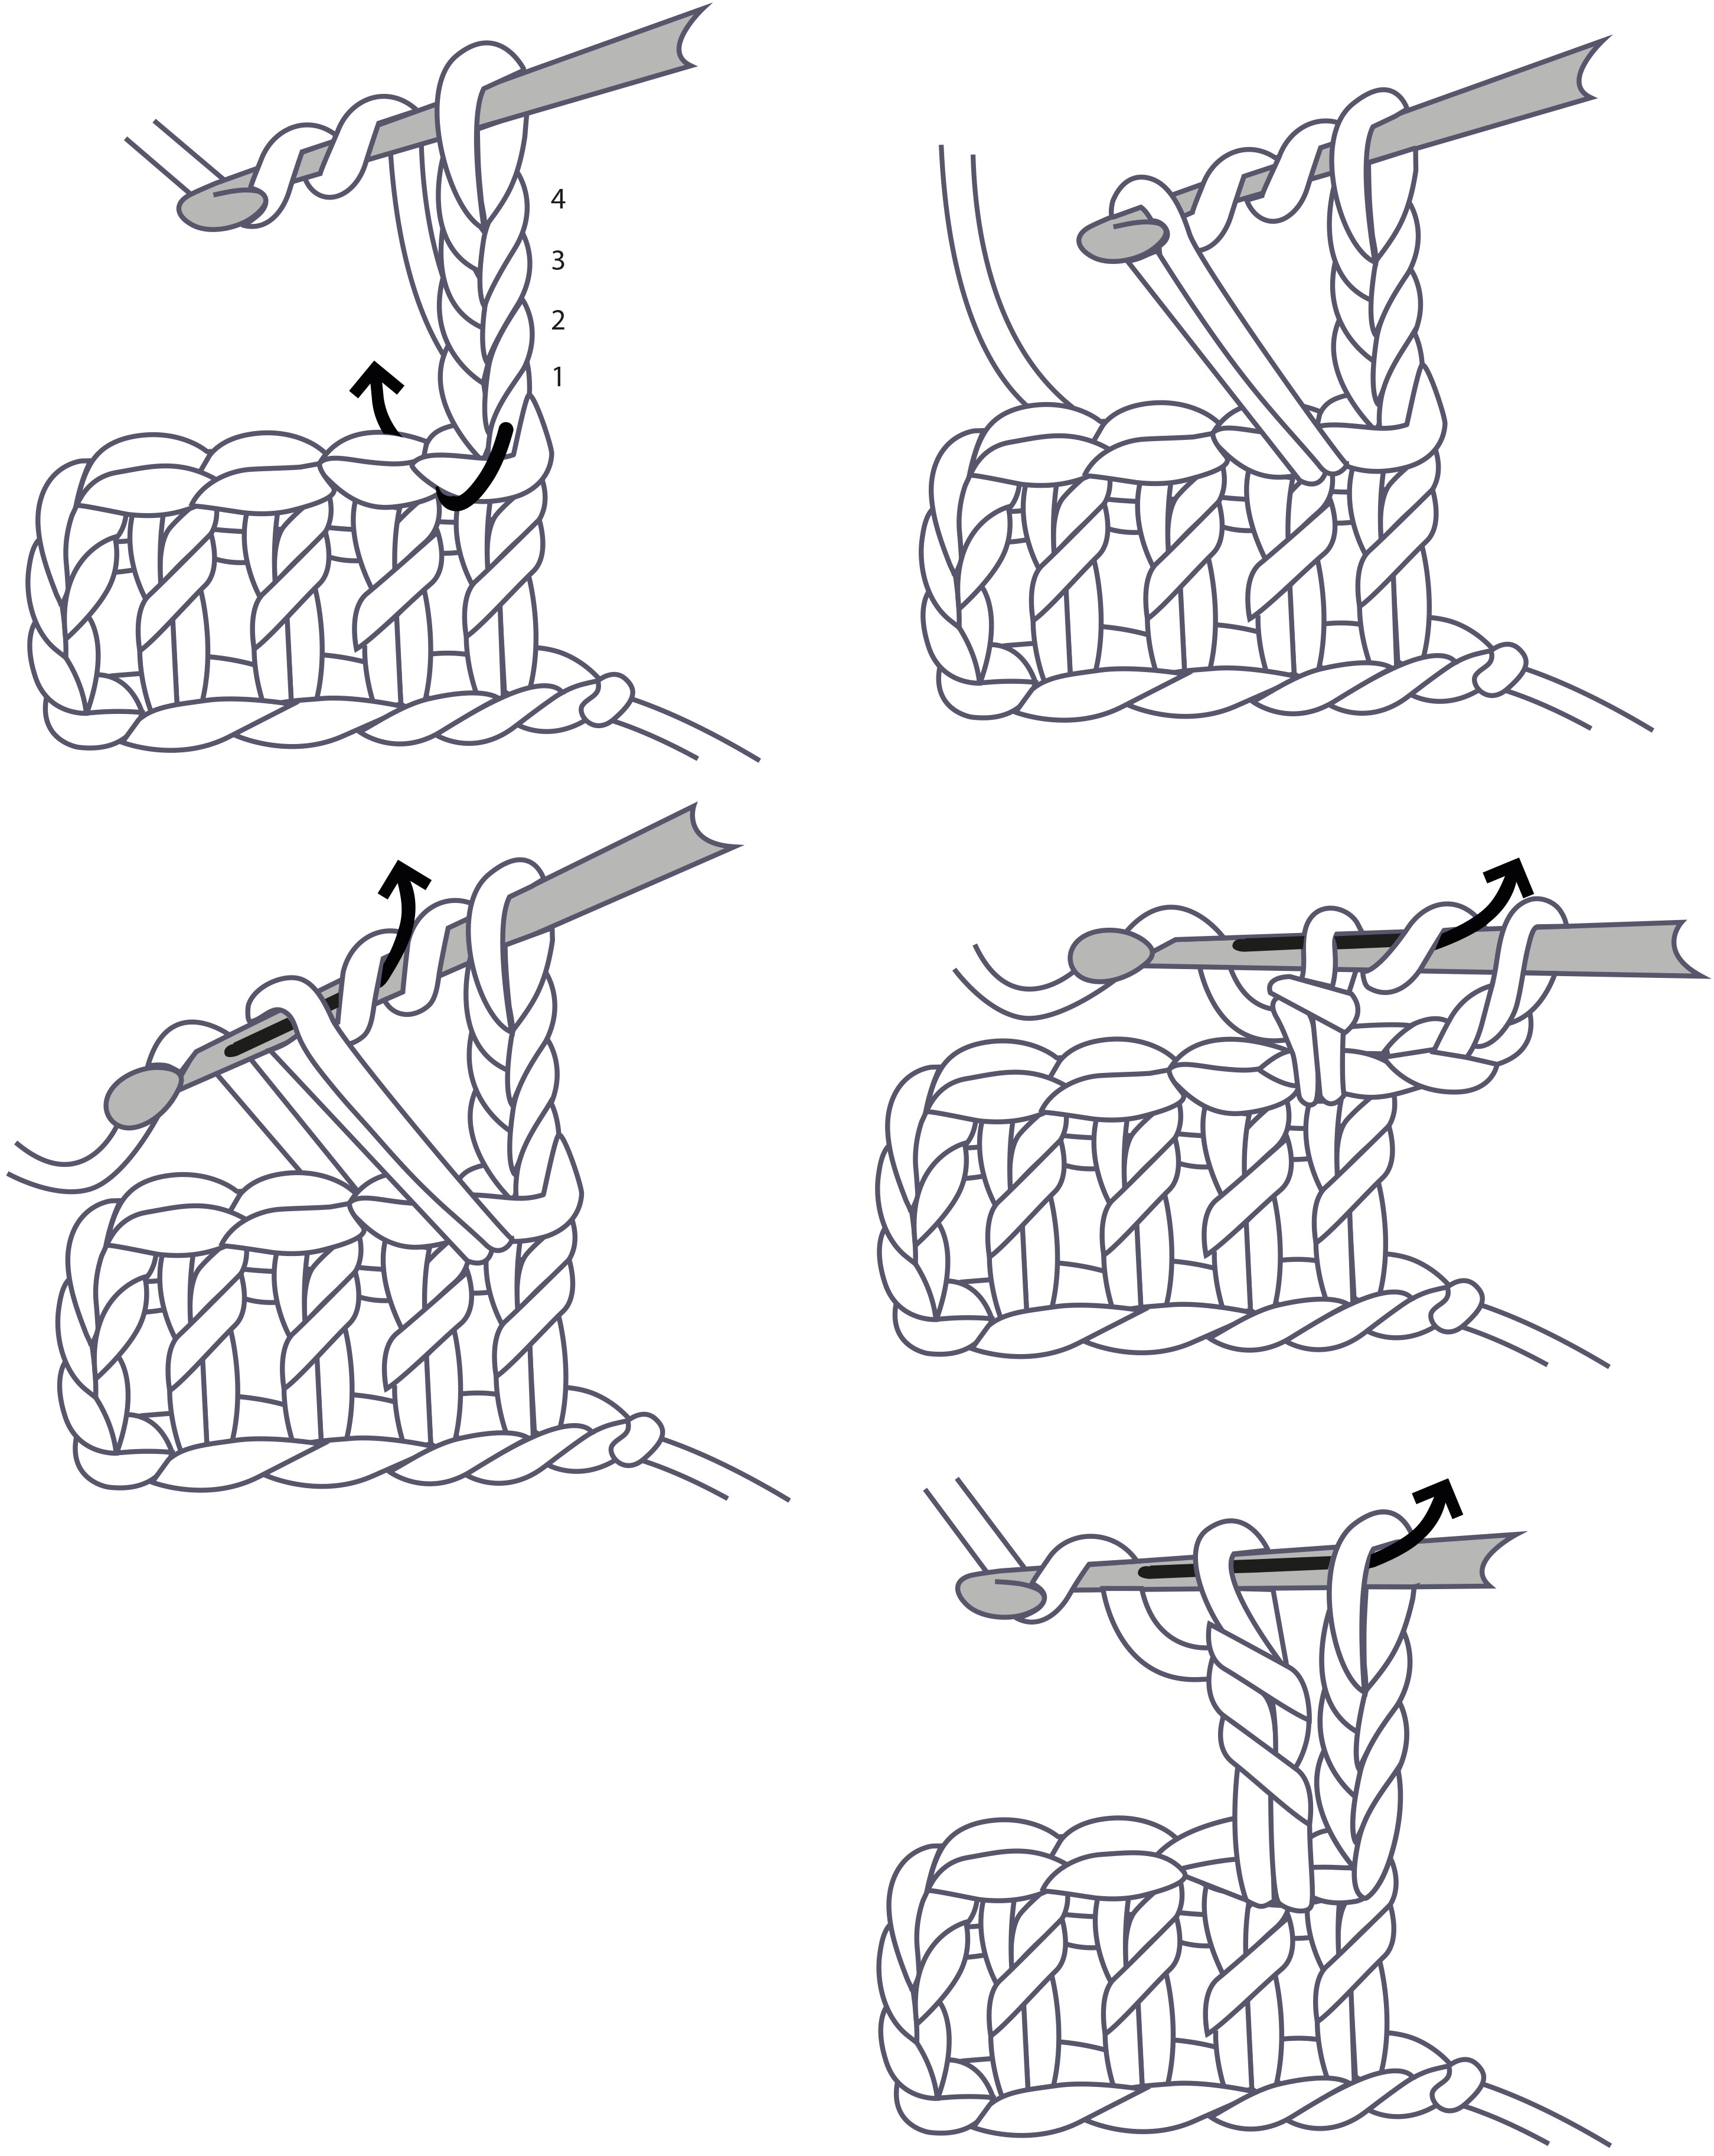 triple crochet stitches